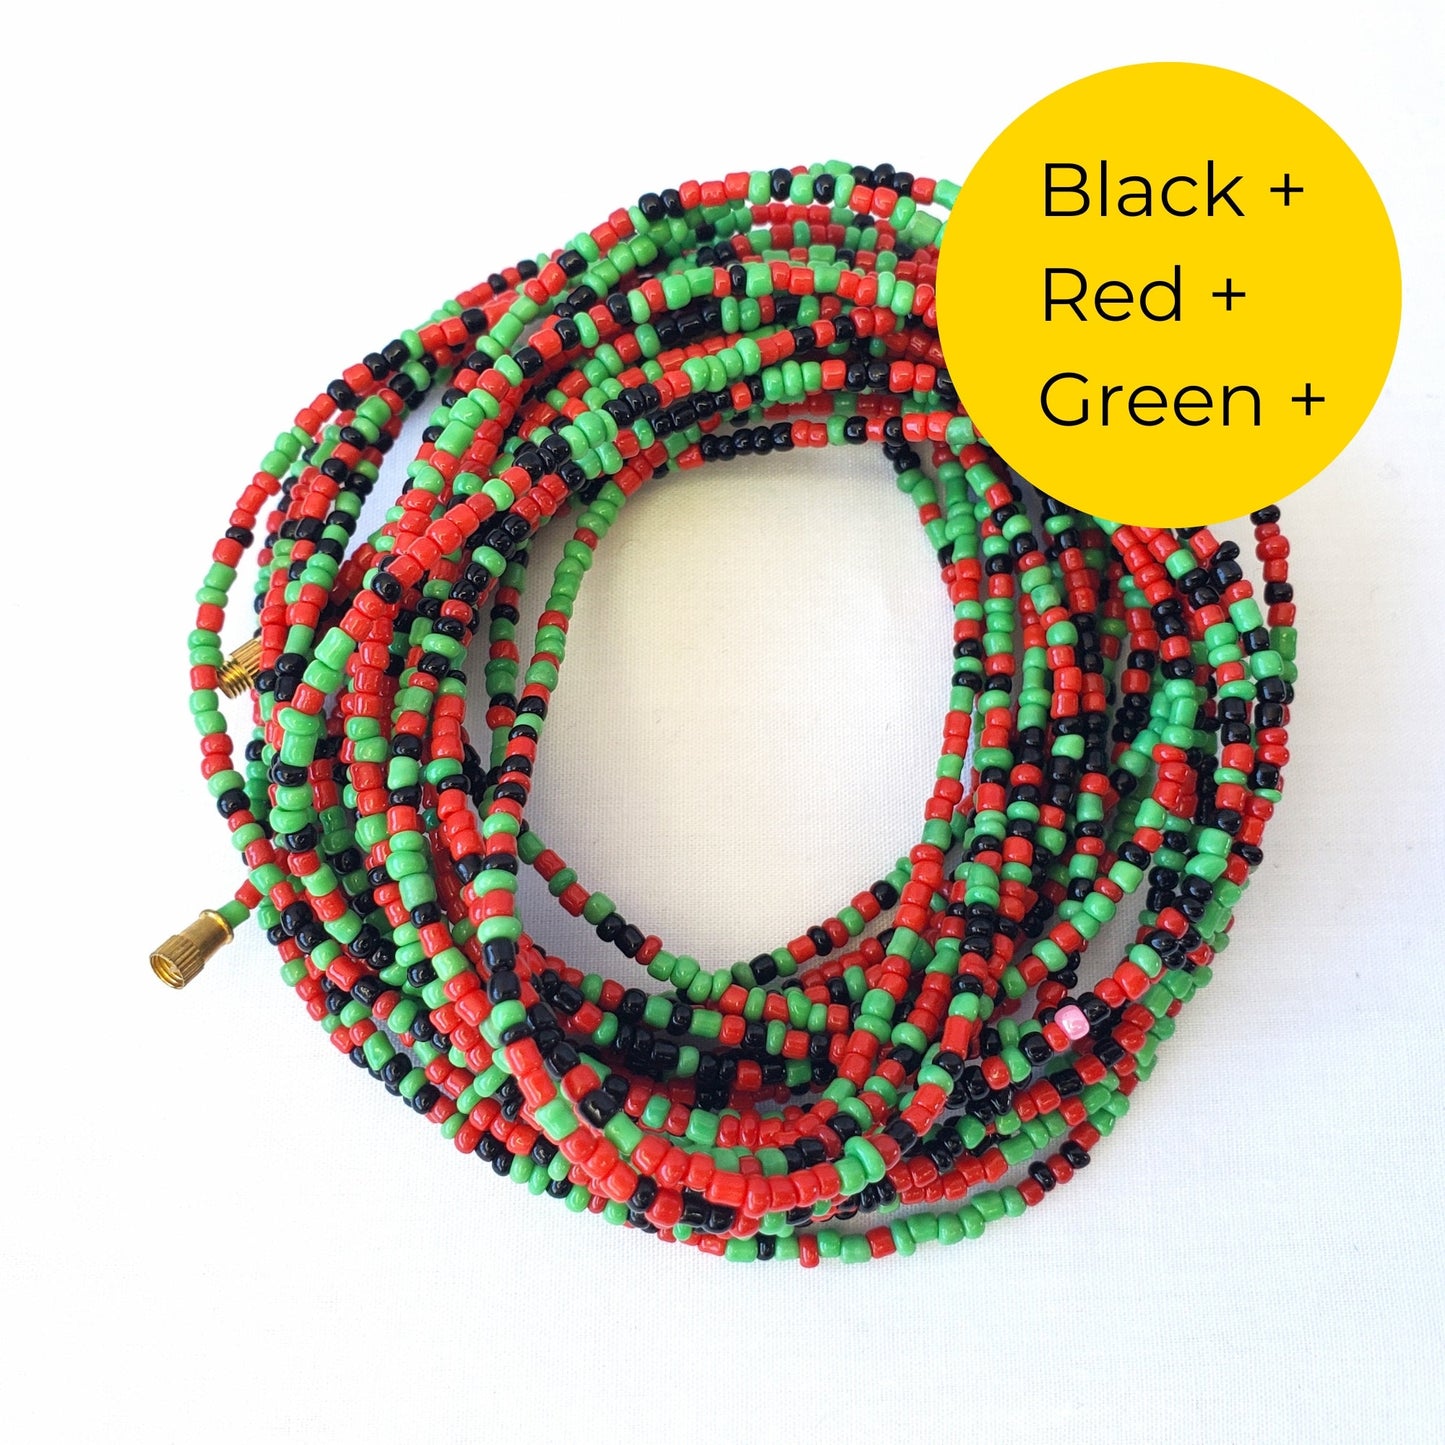 Black Pride & Pan-African Barrel Clasp African Waist Beads